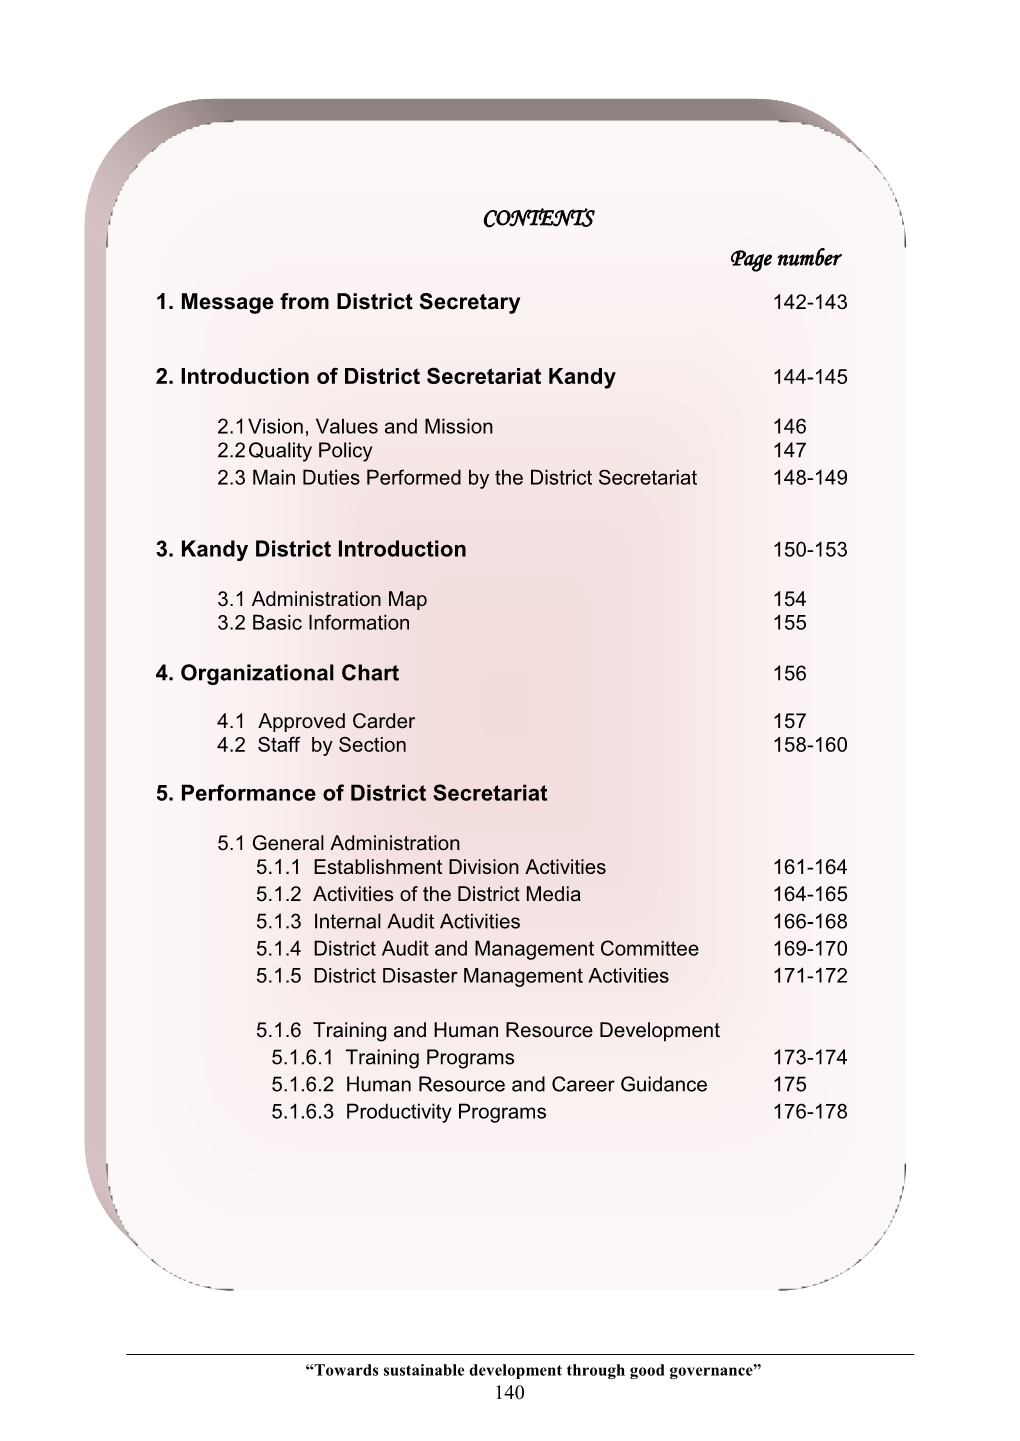 District Secretariat Kandy 144-145